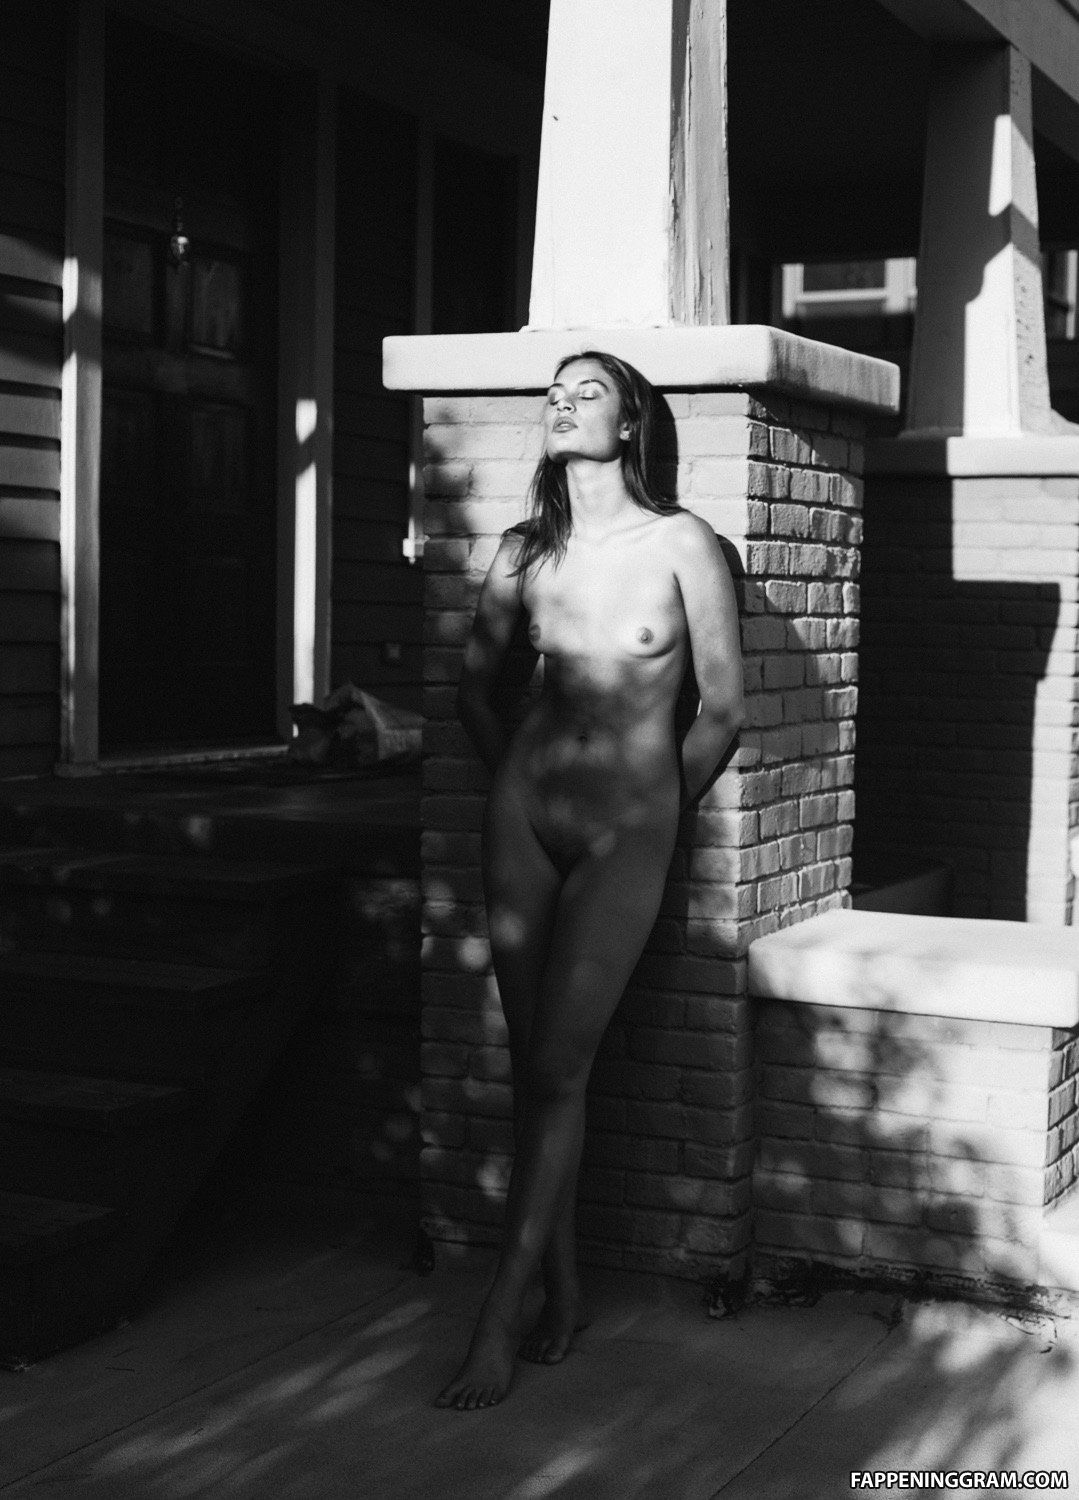 Milena gorum nude 👉 👌 Milena Gorum Nude The Fappening - Fapp